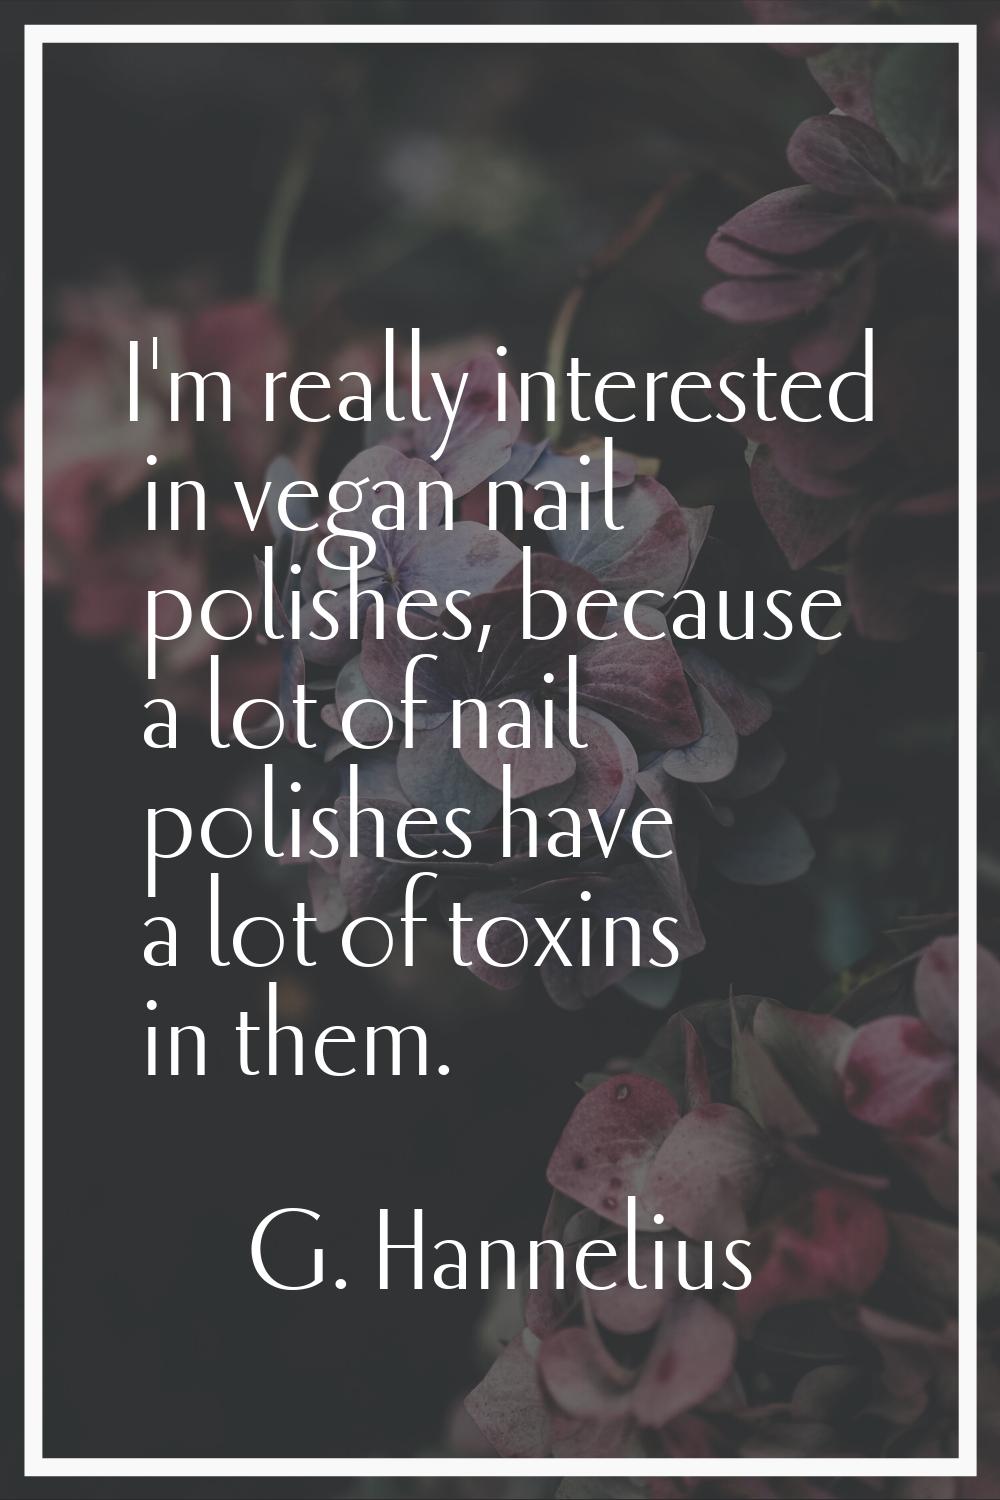 I'm really interested in vegan nail polishes, because a lot of nail polishes have a lot of toxins i